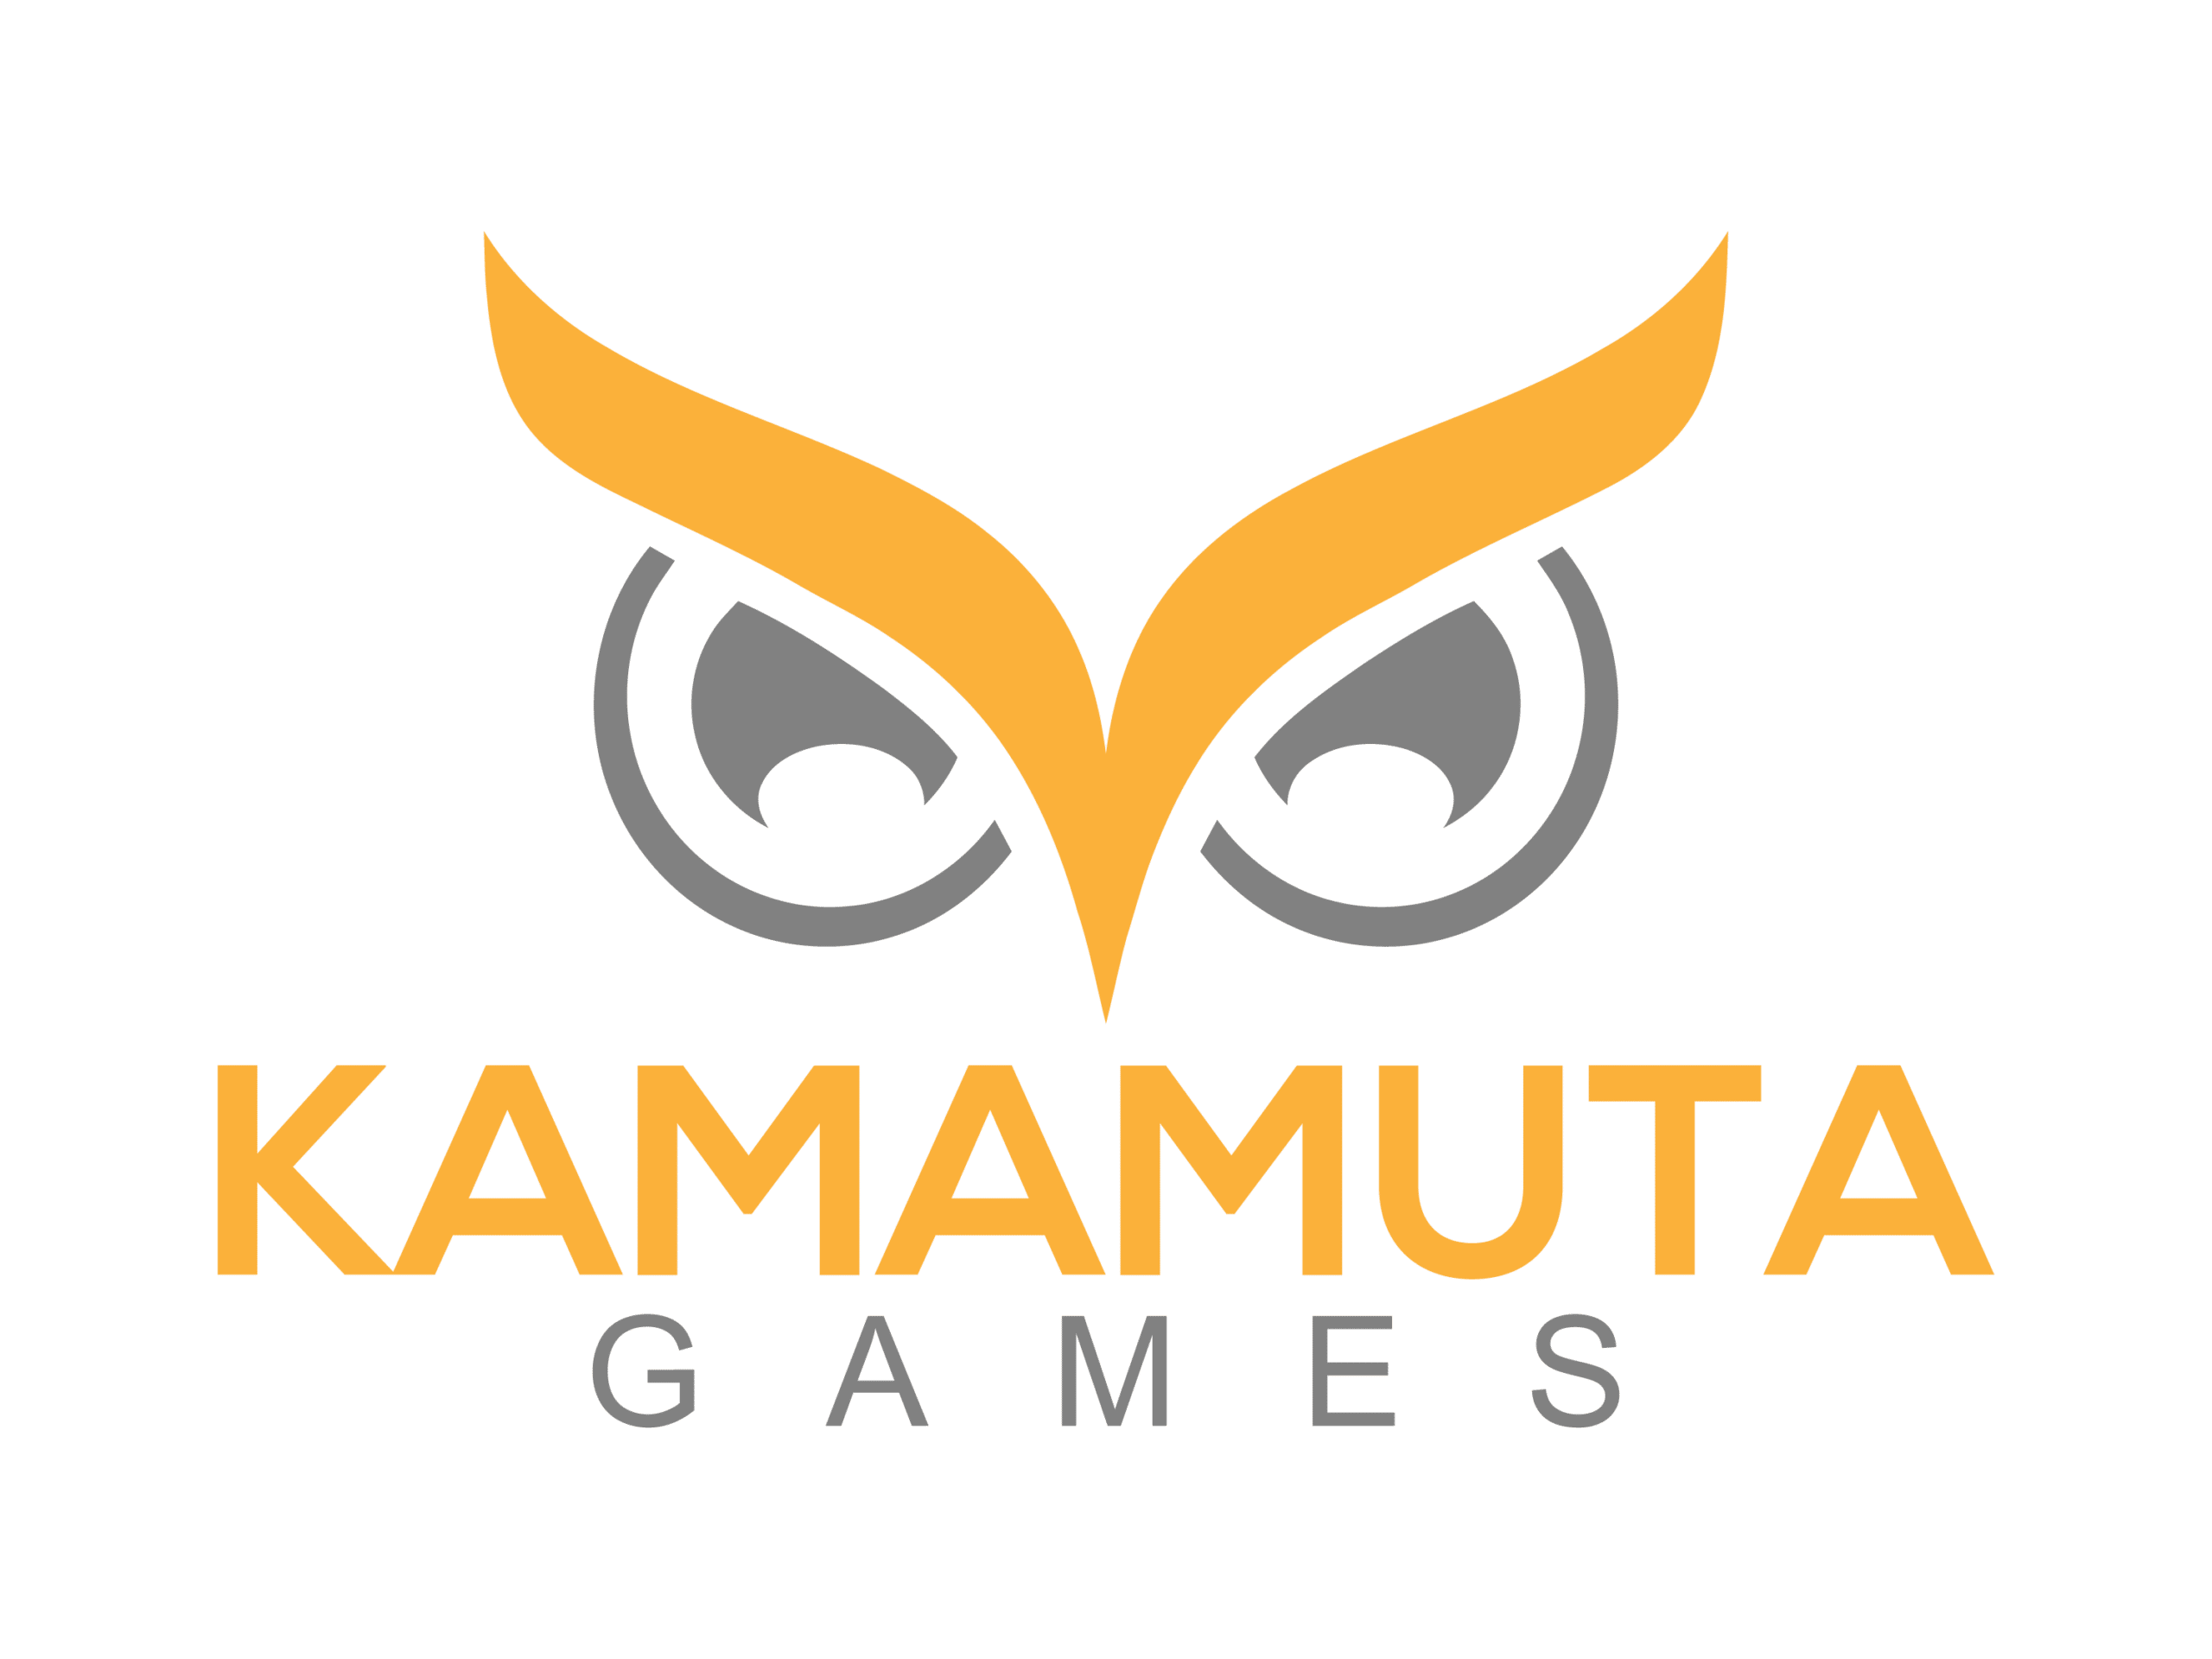 Kamamuta Games